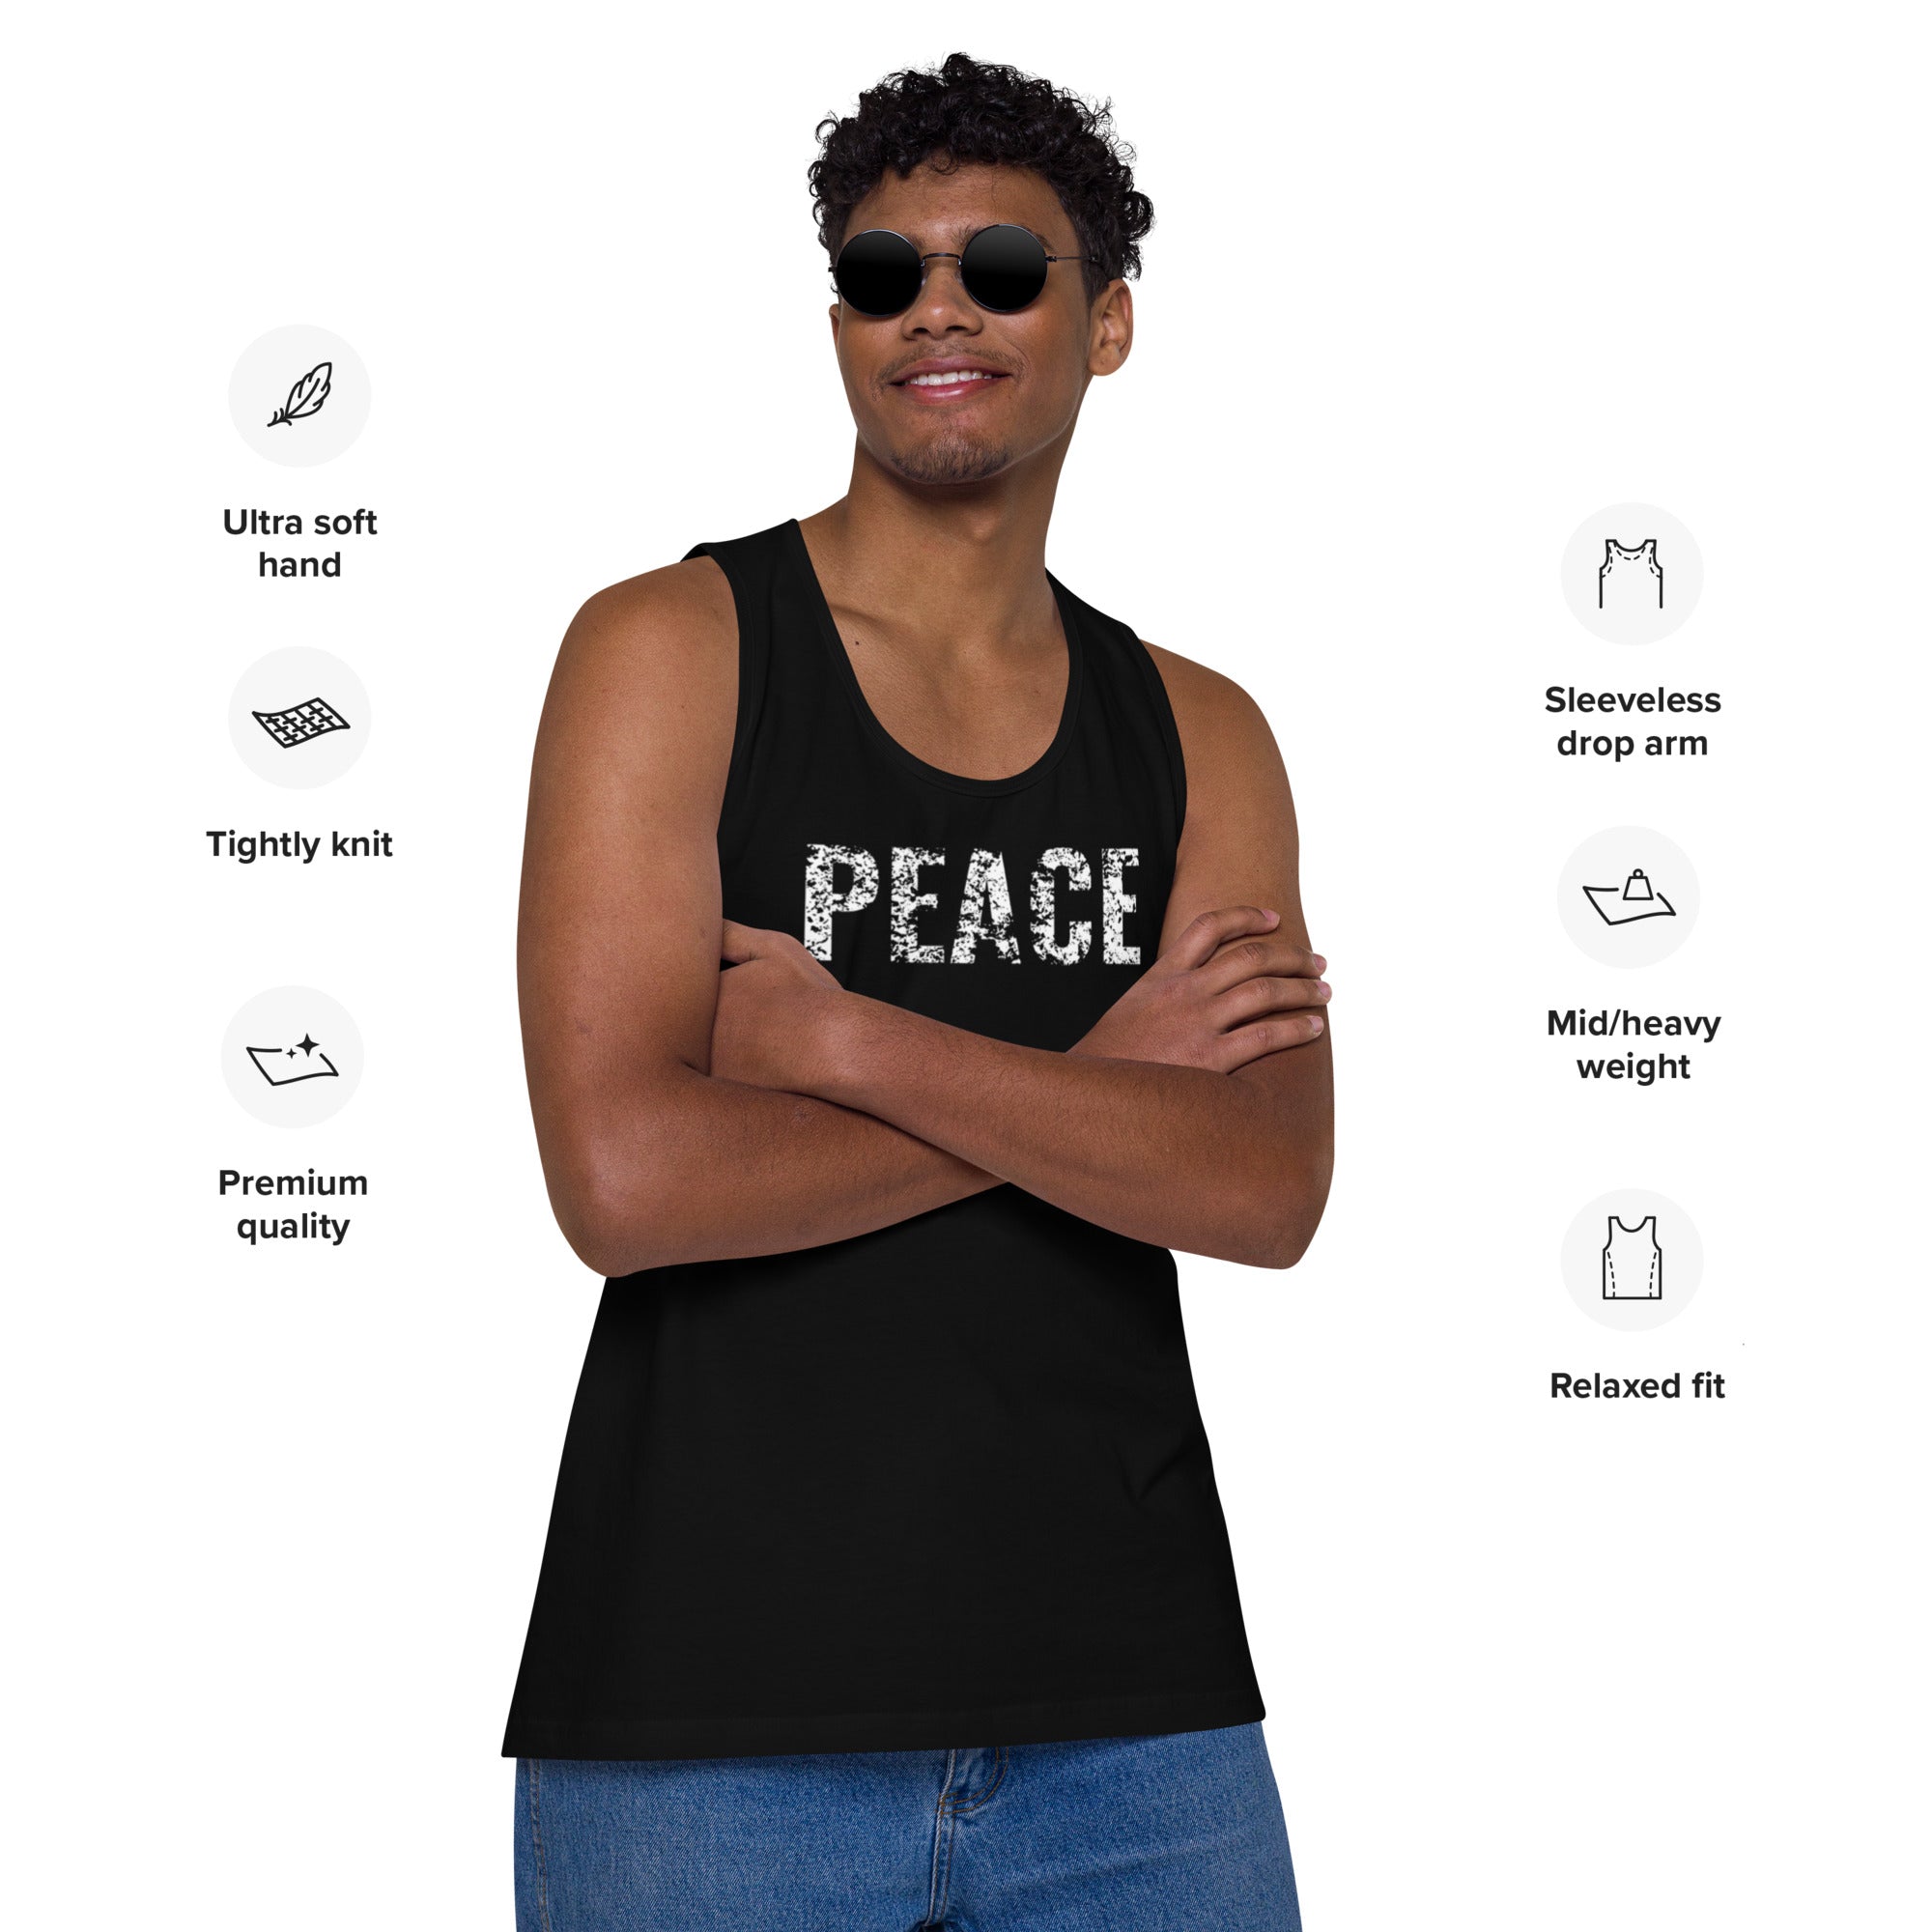 PEACE Men’s premium tank top